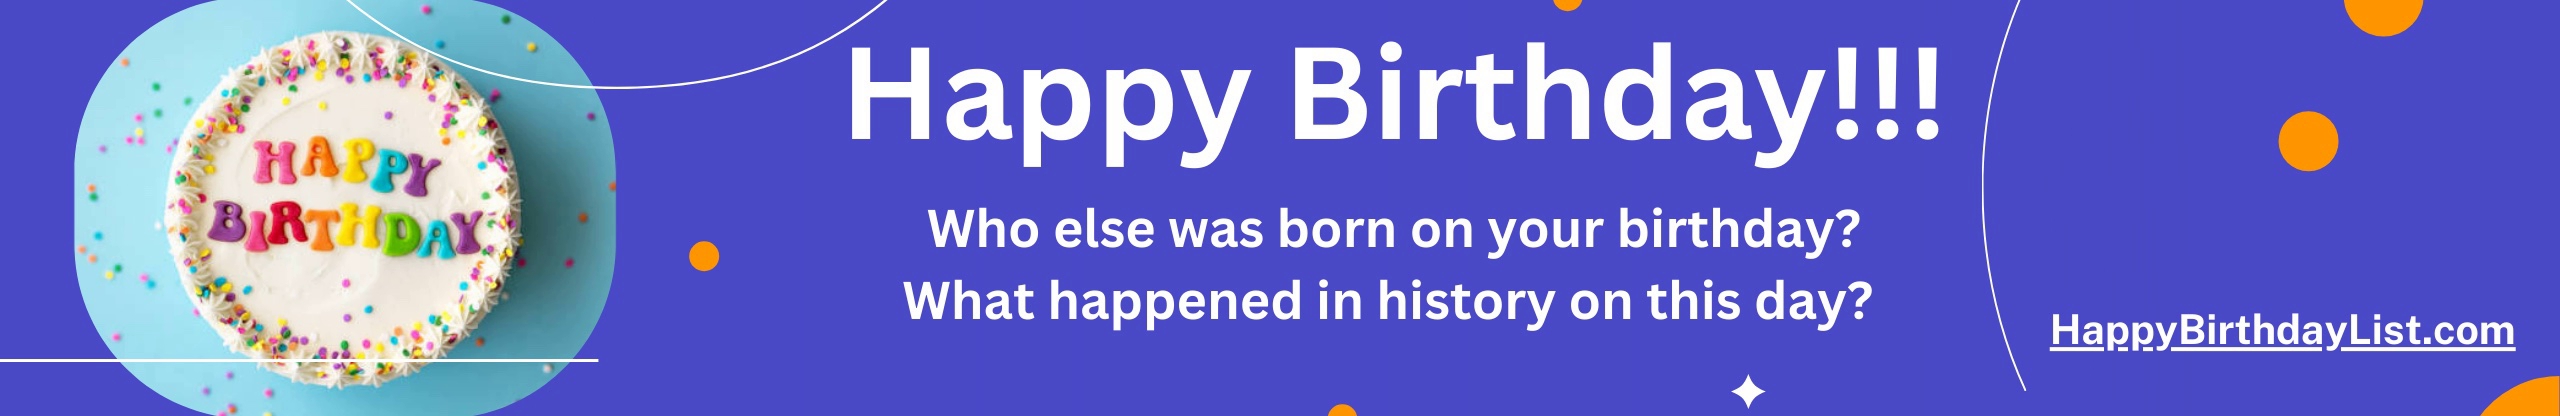 happybirthdaylist.com - Who else was born on your birthday